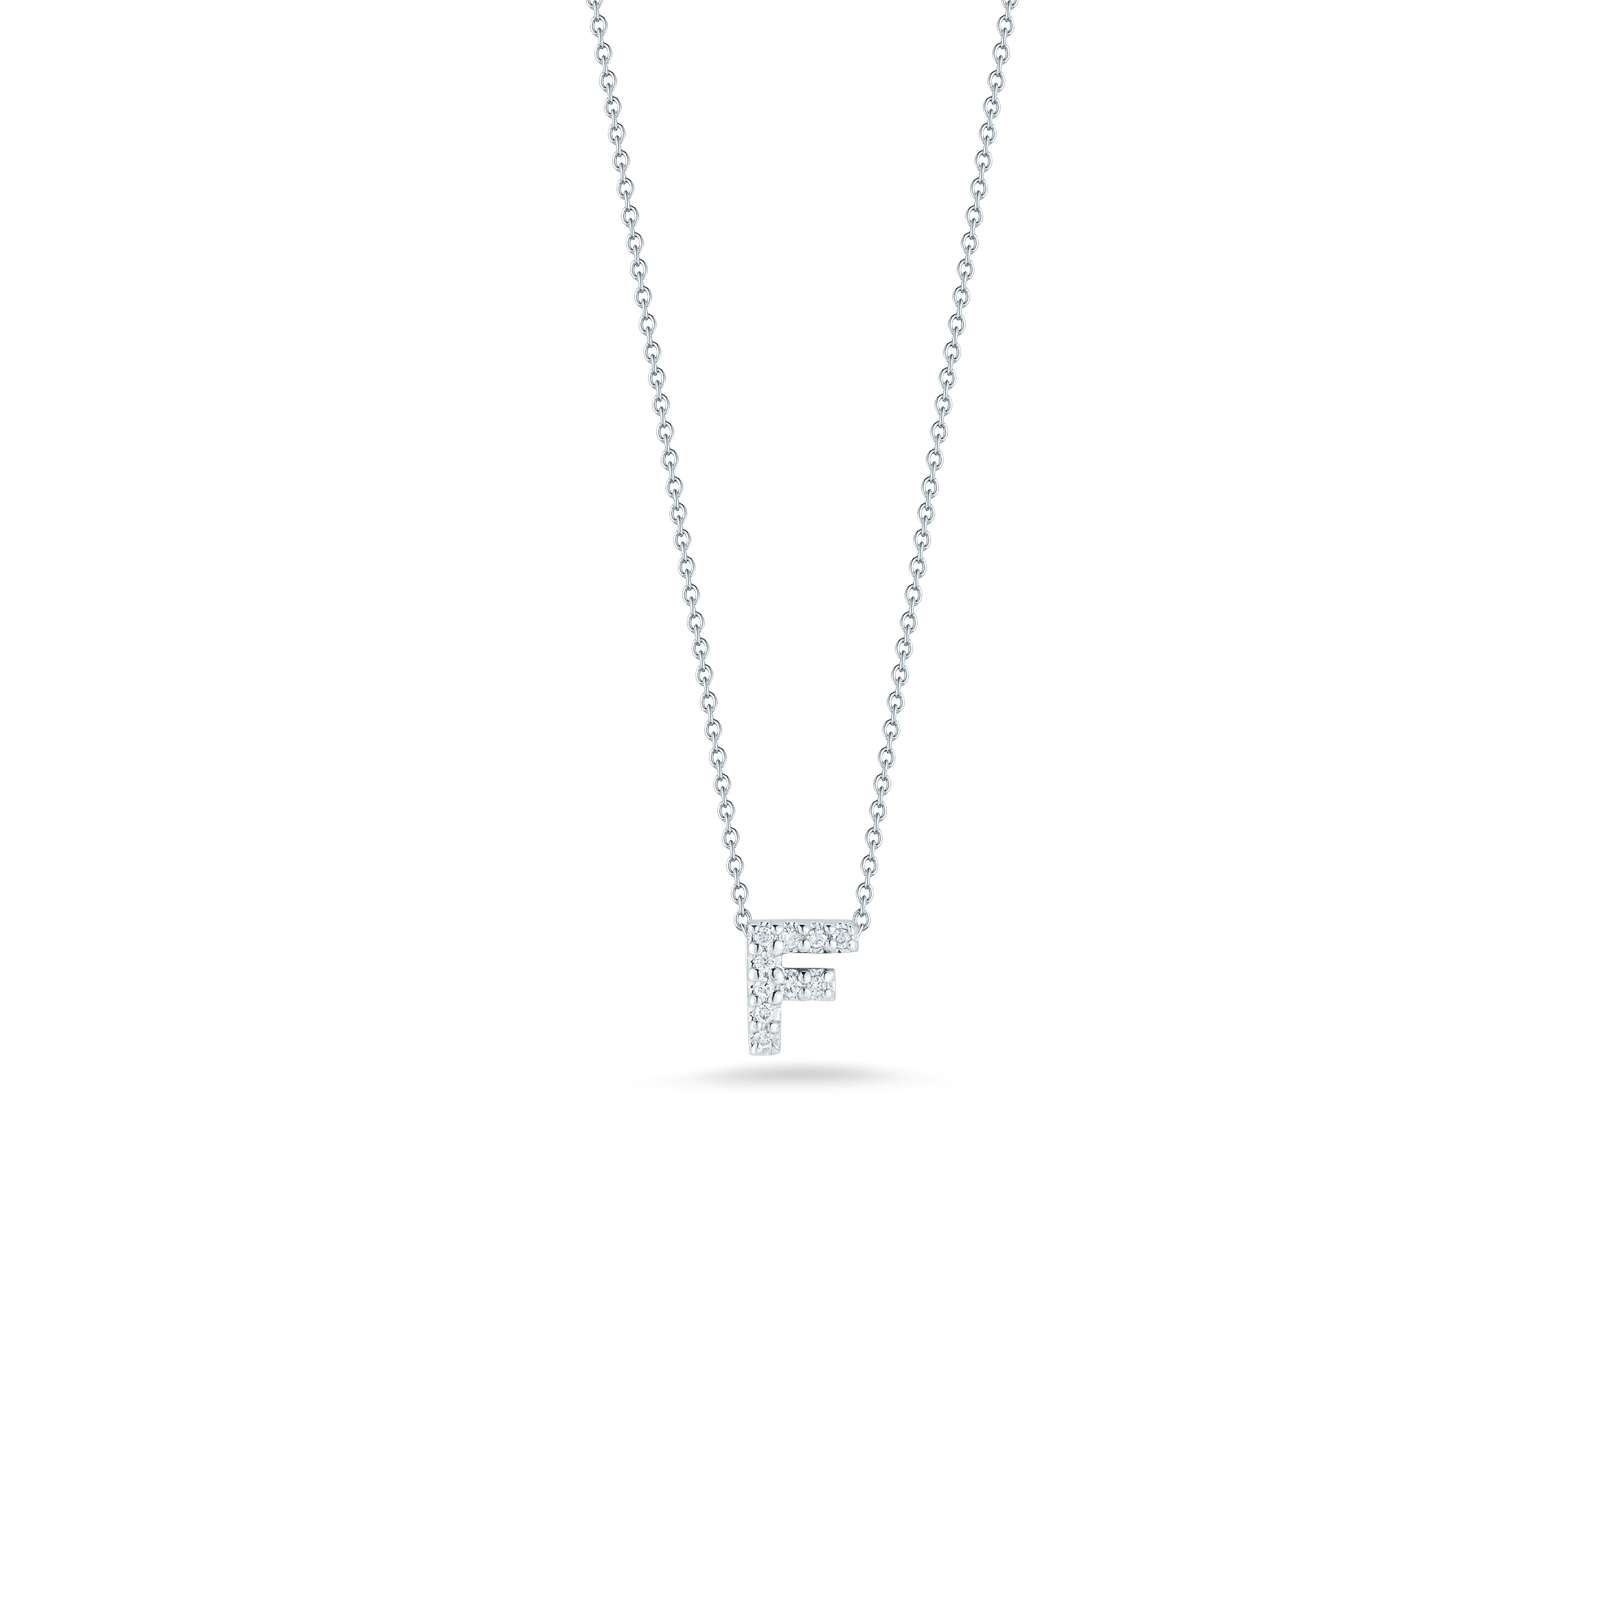 Roberto Coin 18K Diamond Love Letter Necklace "F"